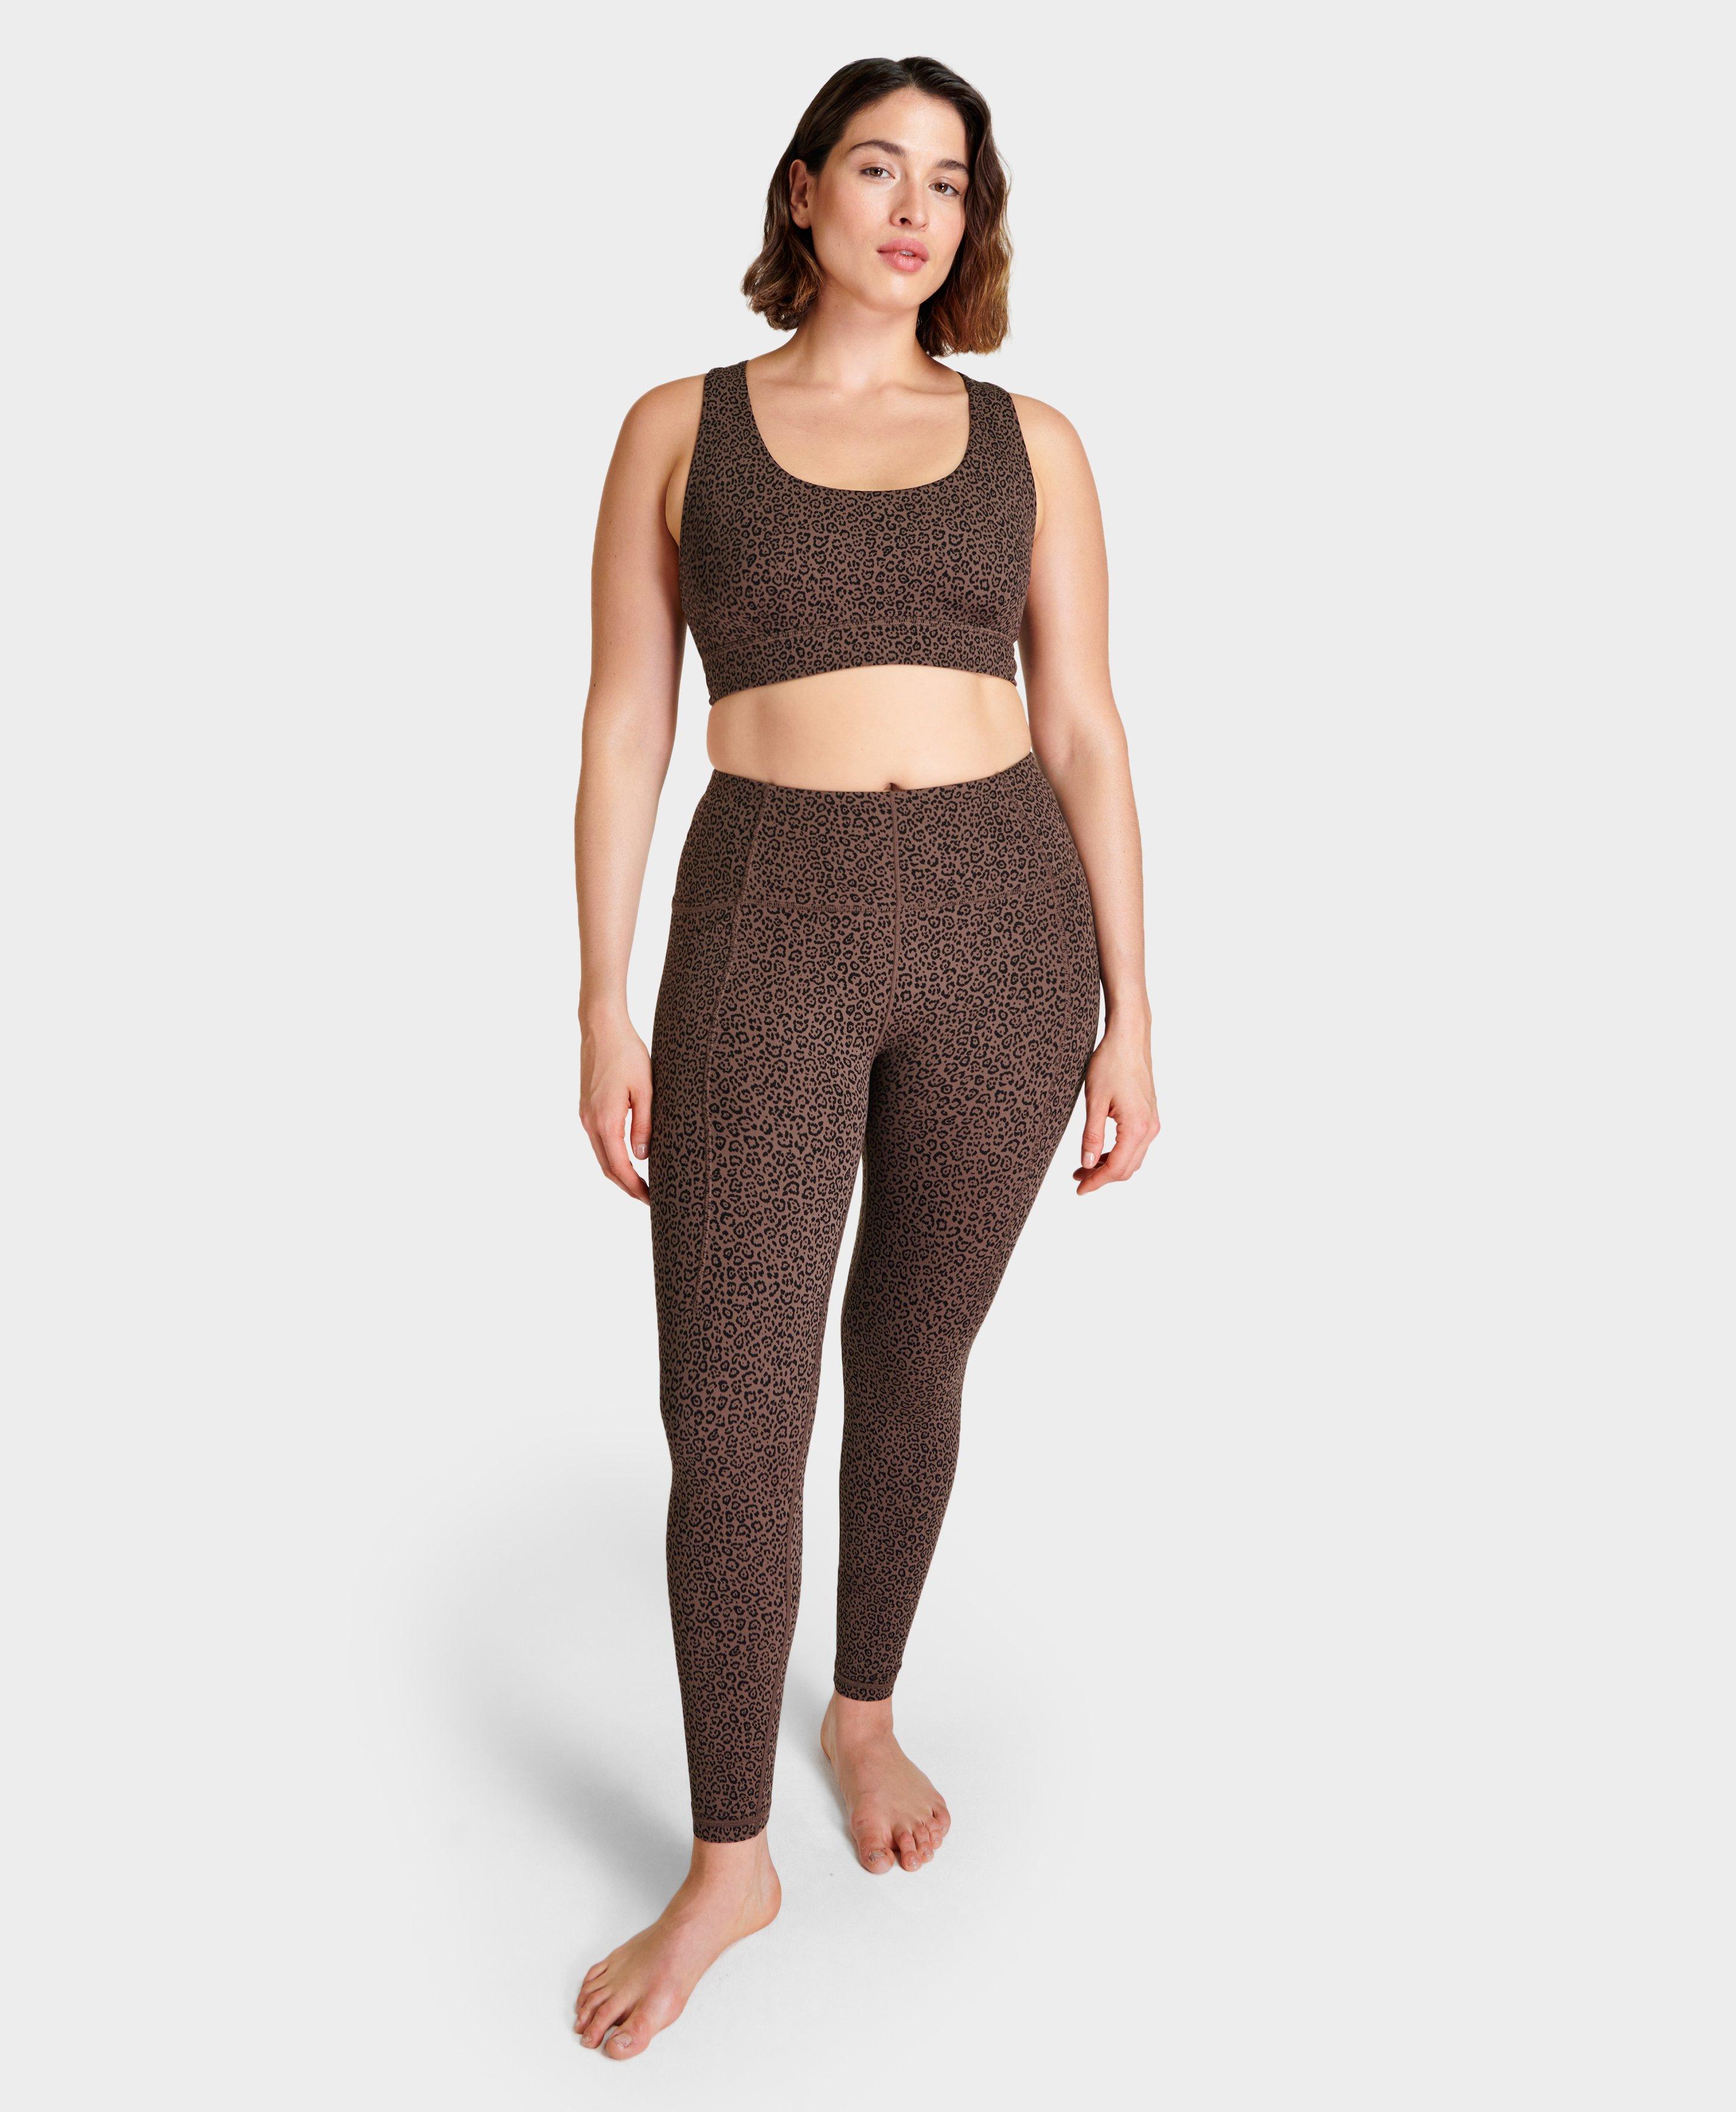 Super Soft Yoga Leggings - Brown Leopard Markings Print, Women's Leggings